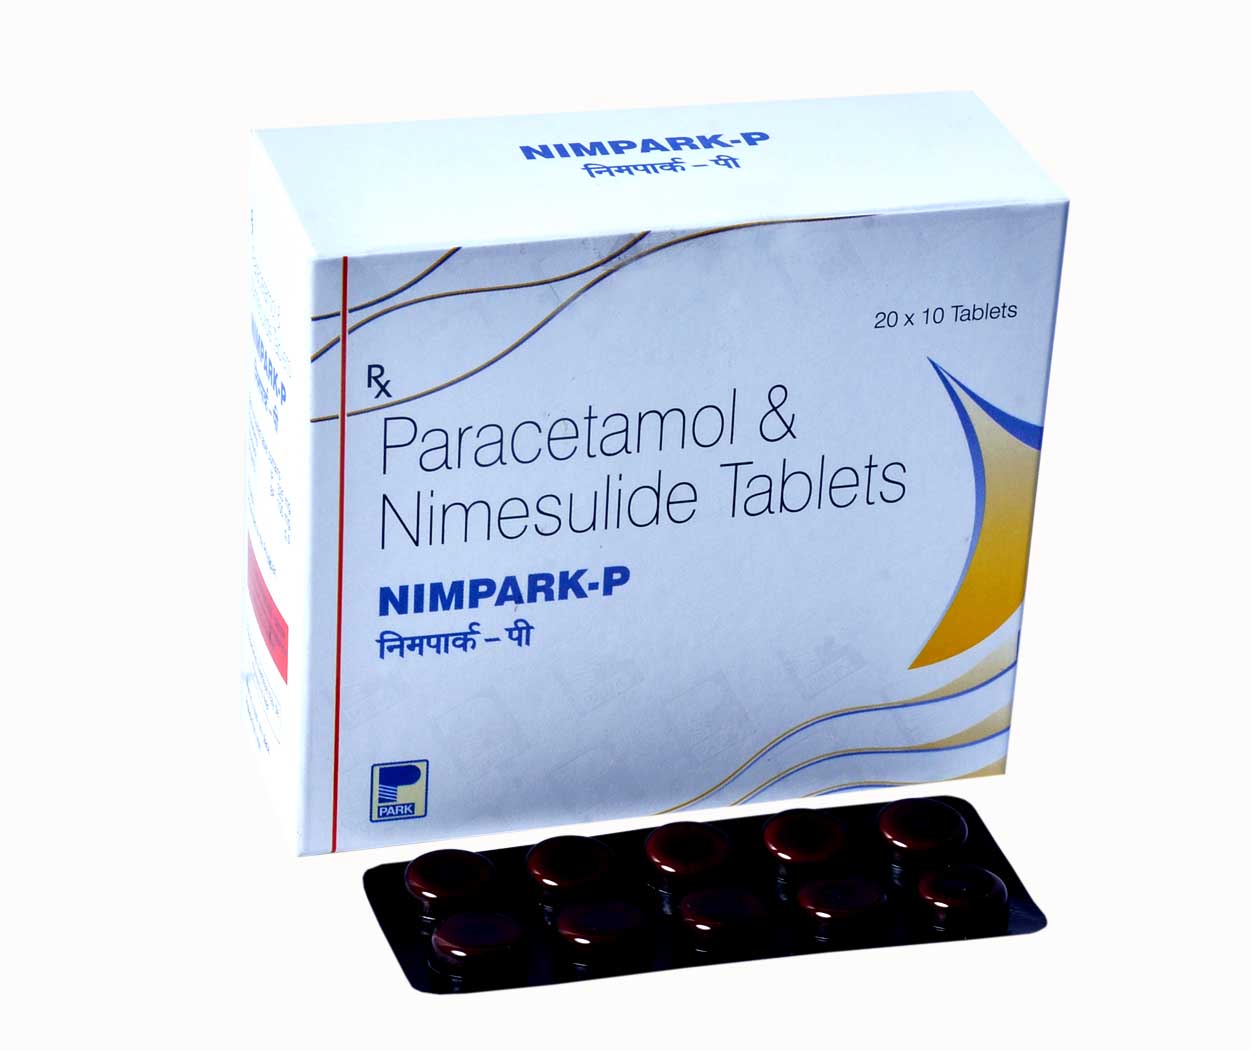 Product Name: NIMPARK P, Compositions of NIMPARK P are Paracetamol & Nimesulide Tablets - Park Pharmaceuticals